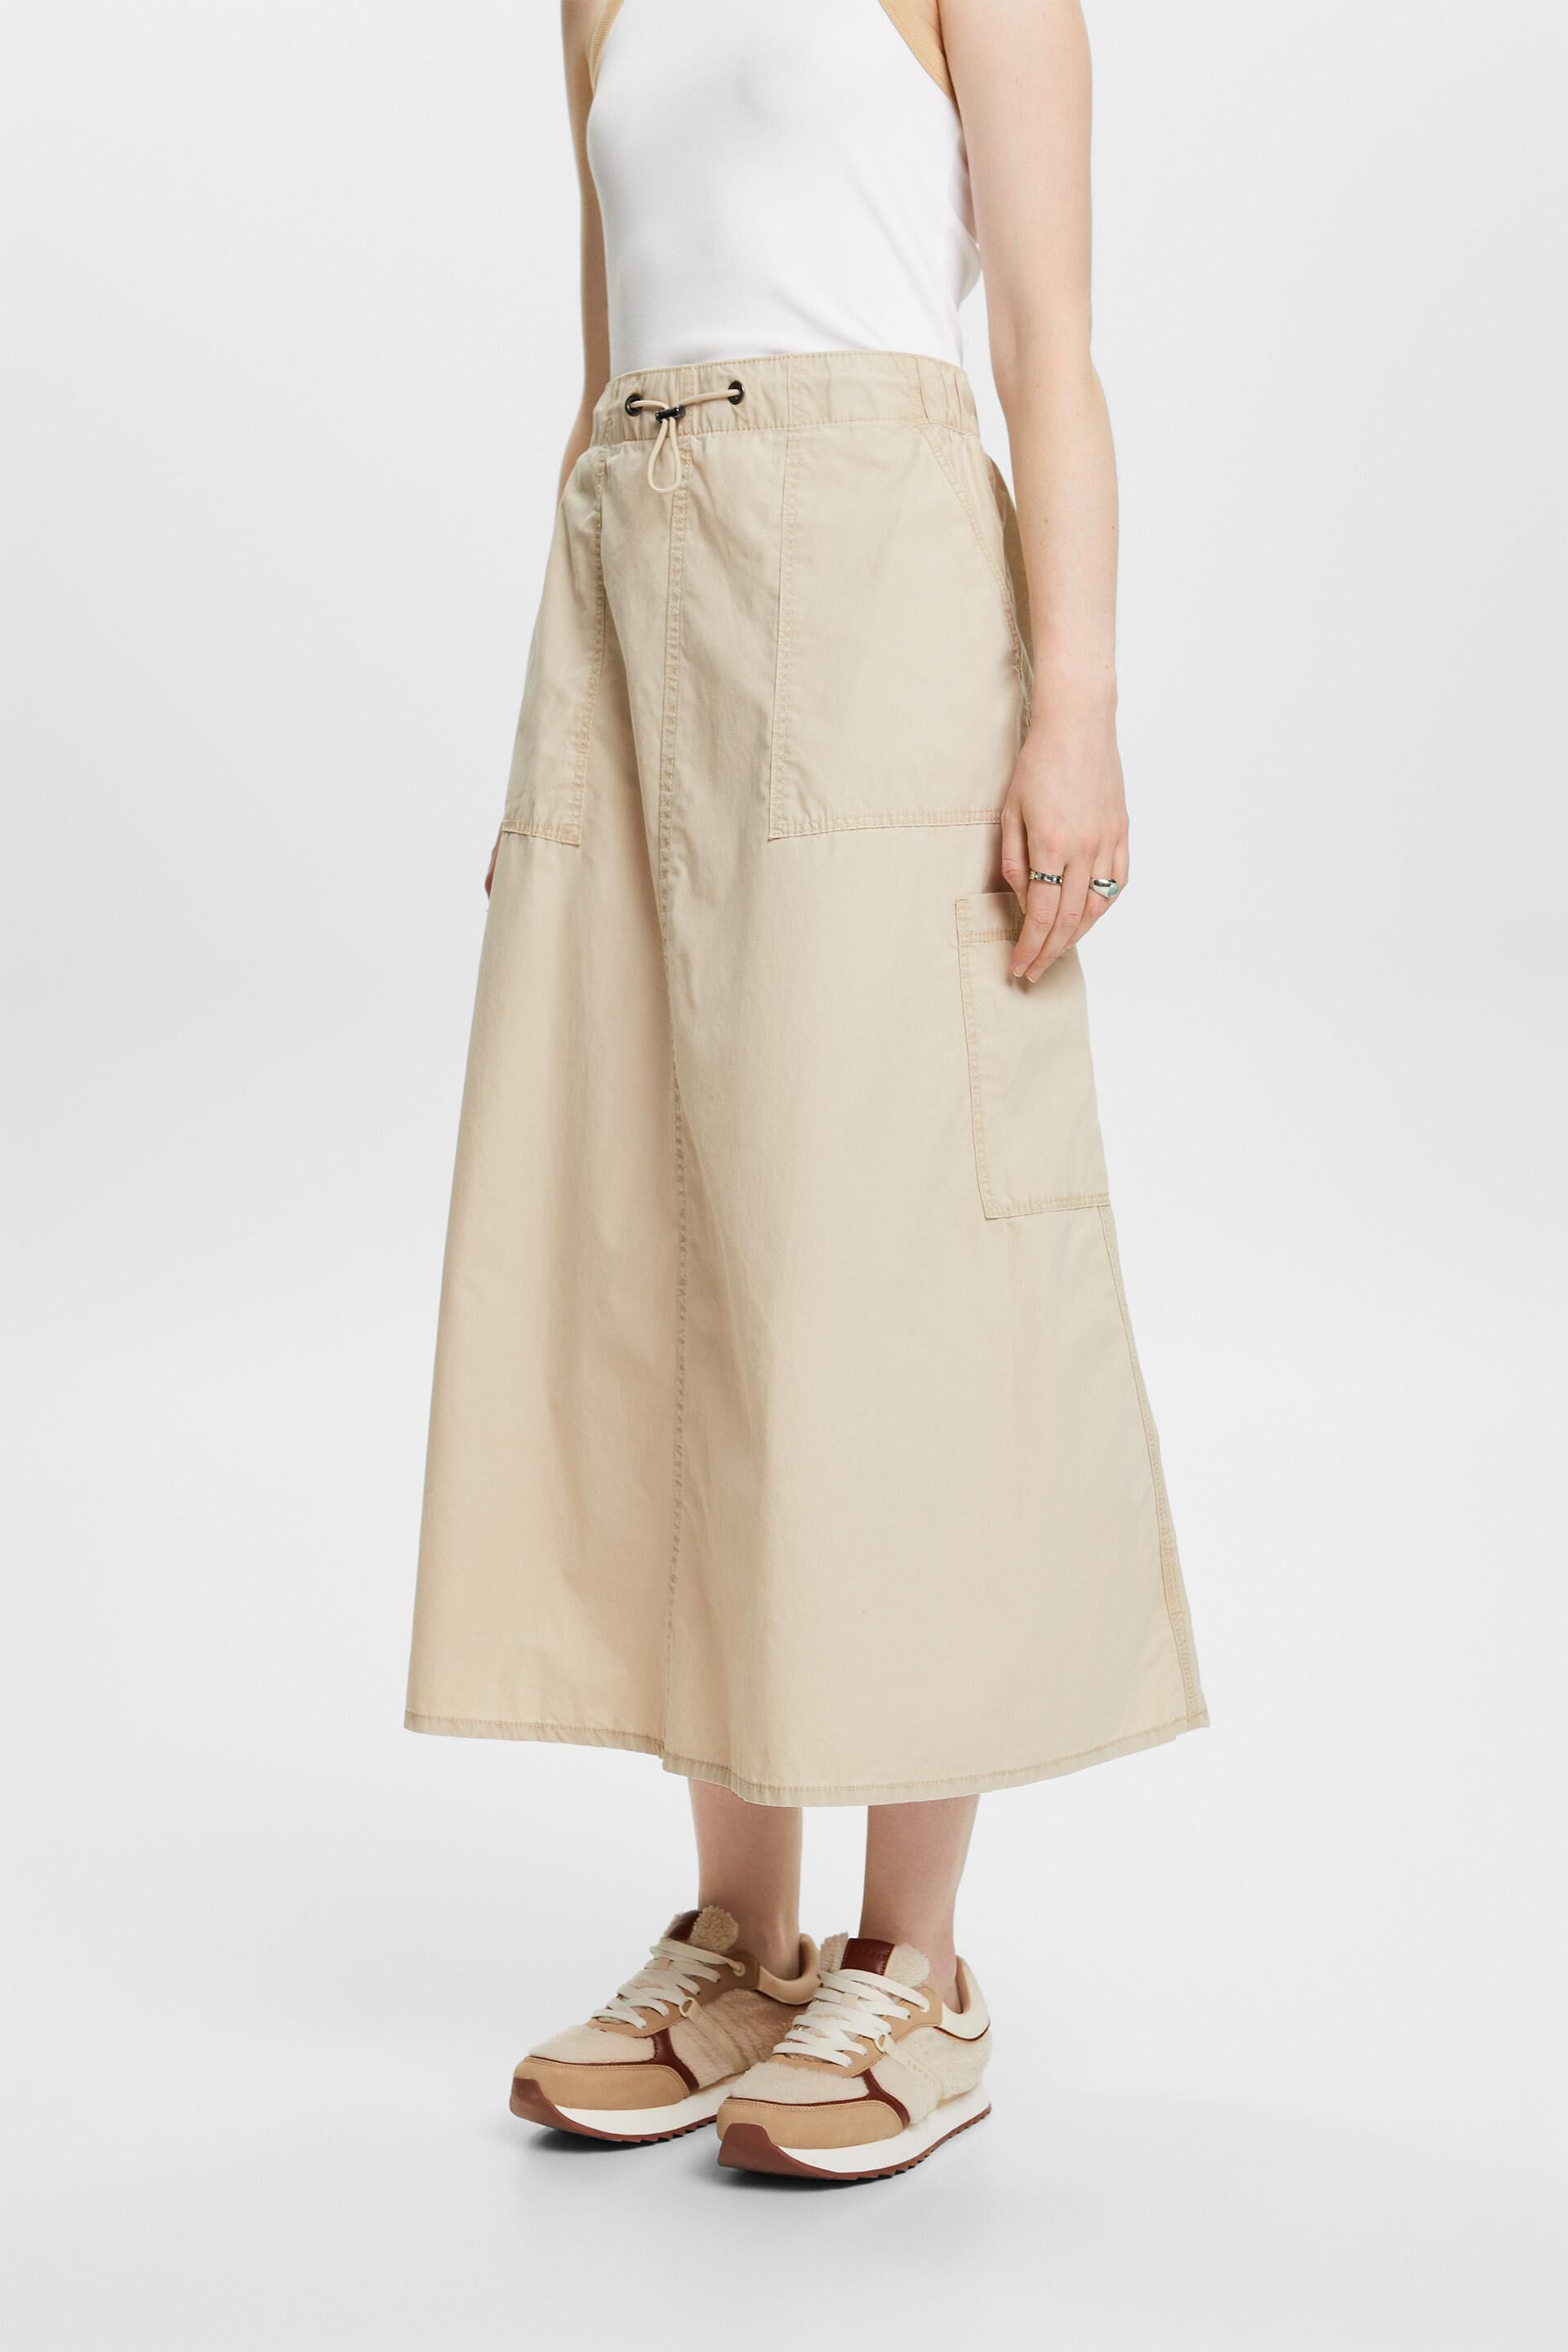 Esprit Pull-on skirt, 100% cotton cargo